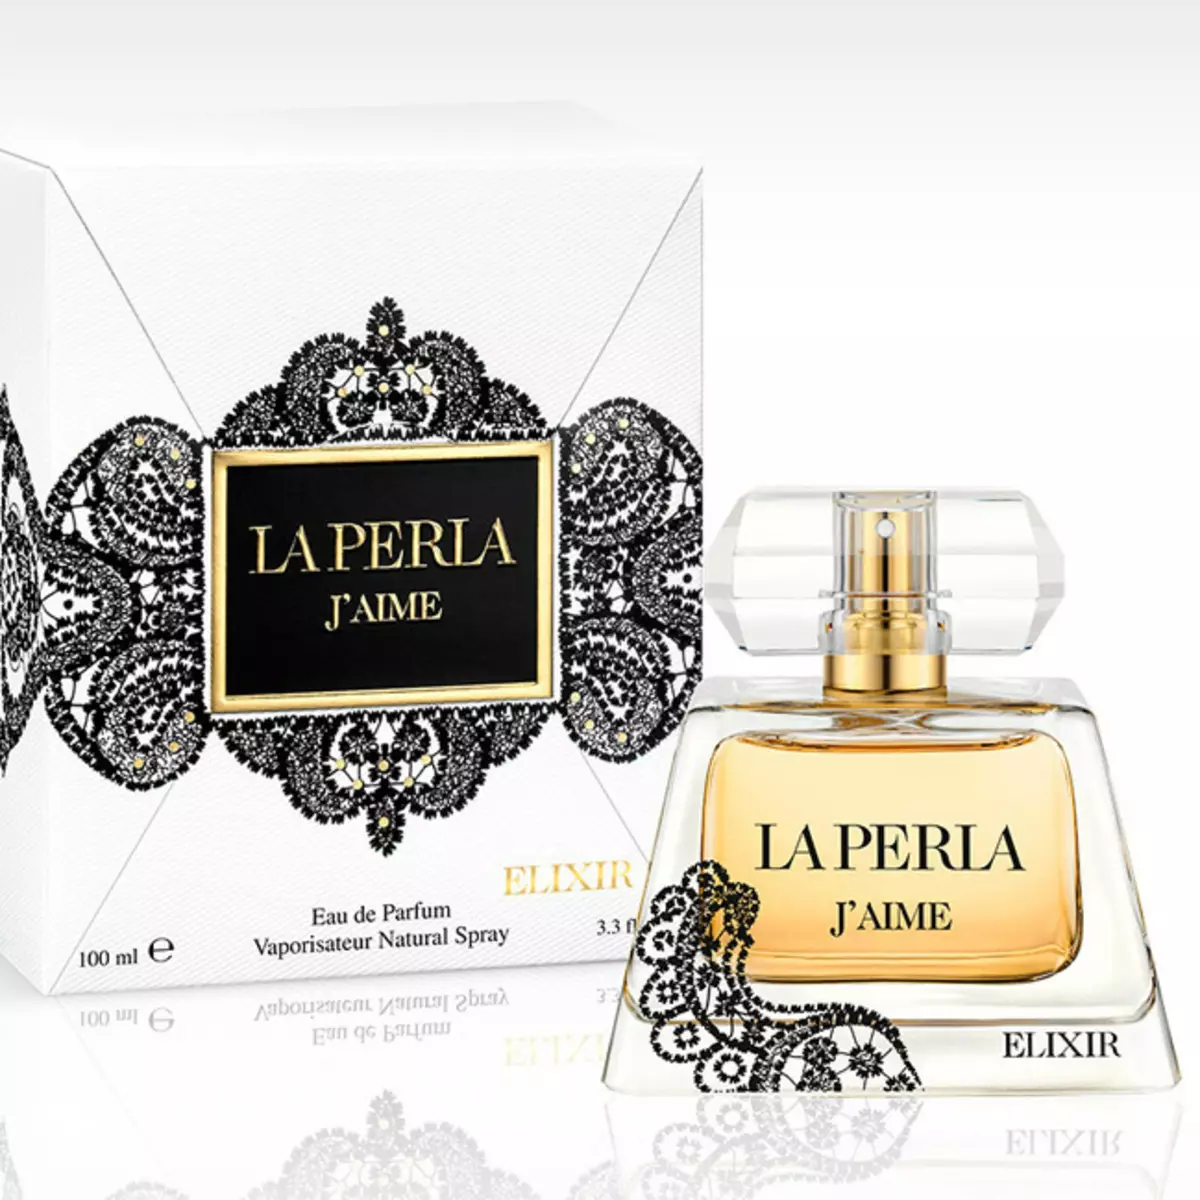 Perfume La Perla: Wanita Perfume, Air Tandas Divina, J'aime dan Les Fleurs, La Perla Flavors 25270_2